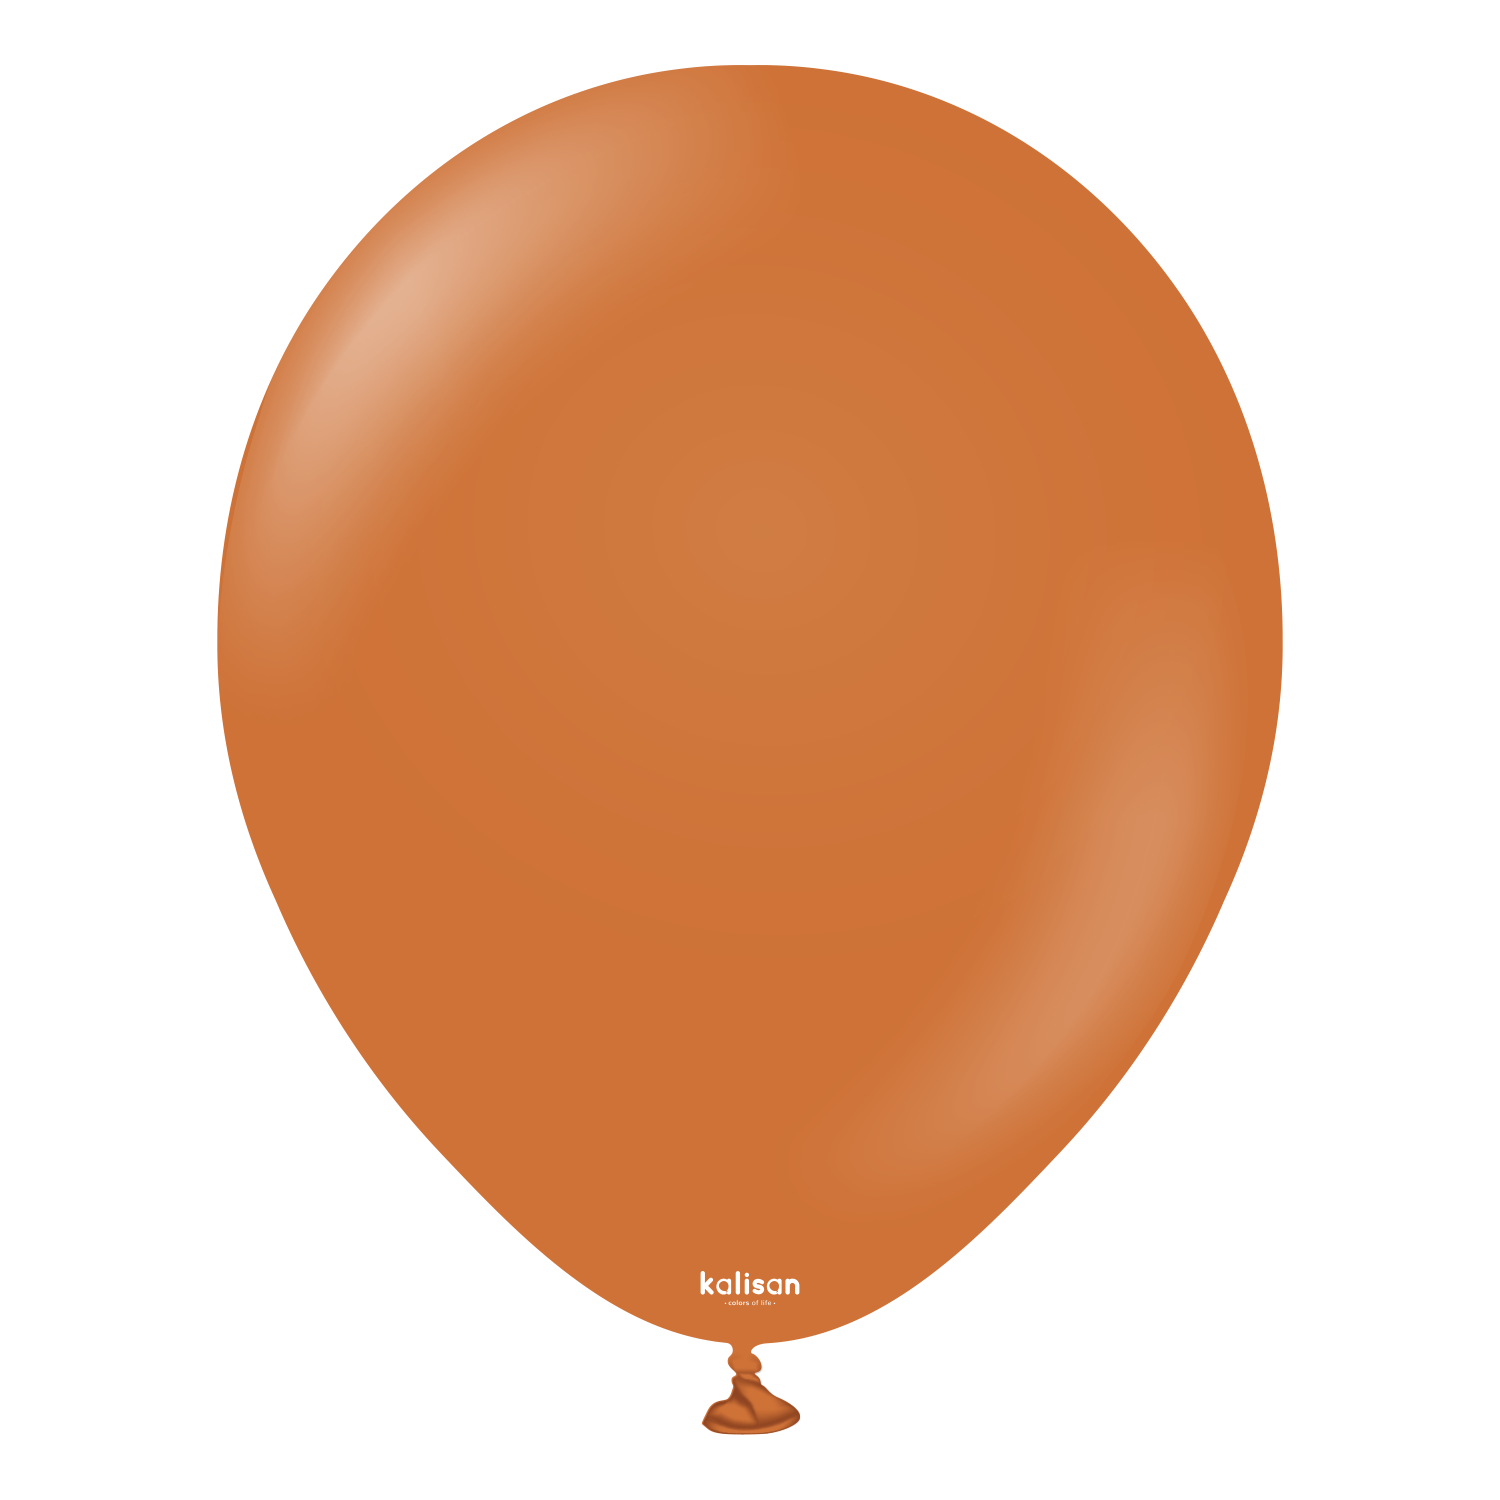 Premium lateksballong Kalisan i karamellbrun farge 